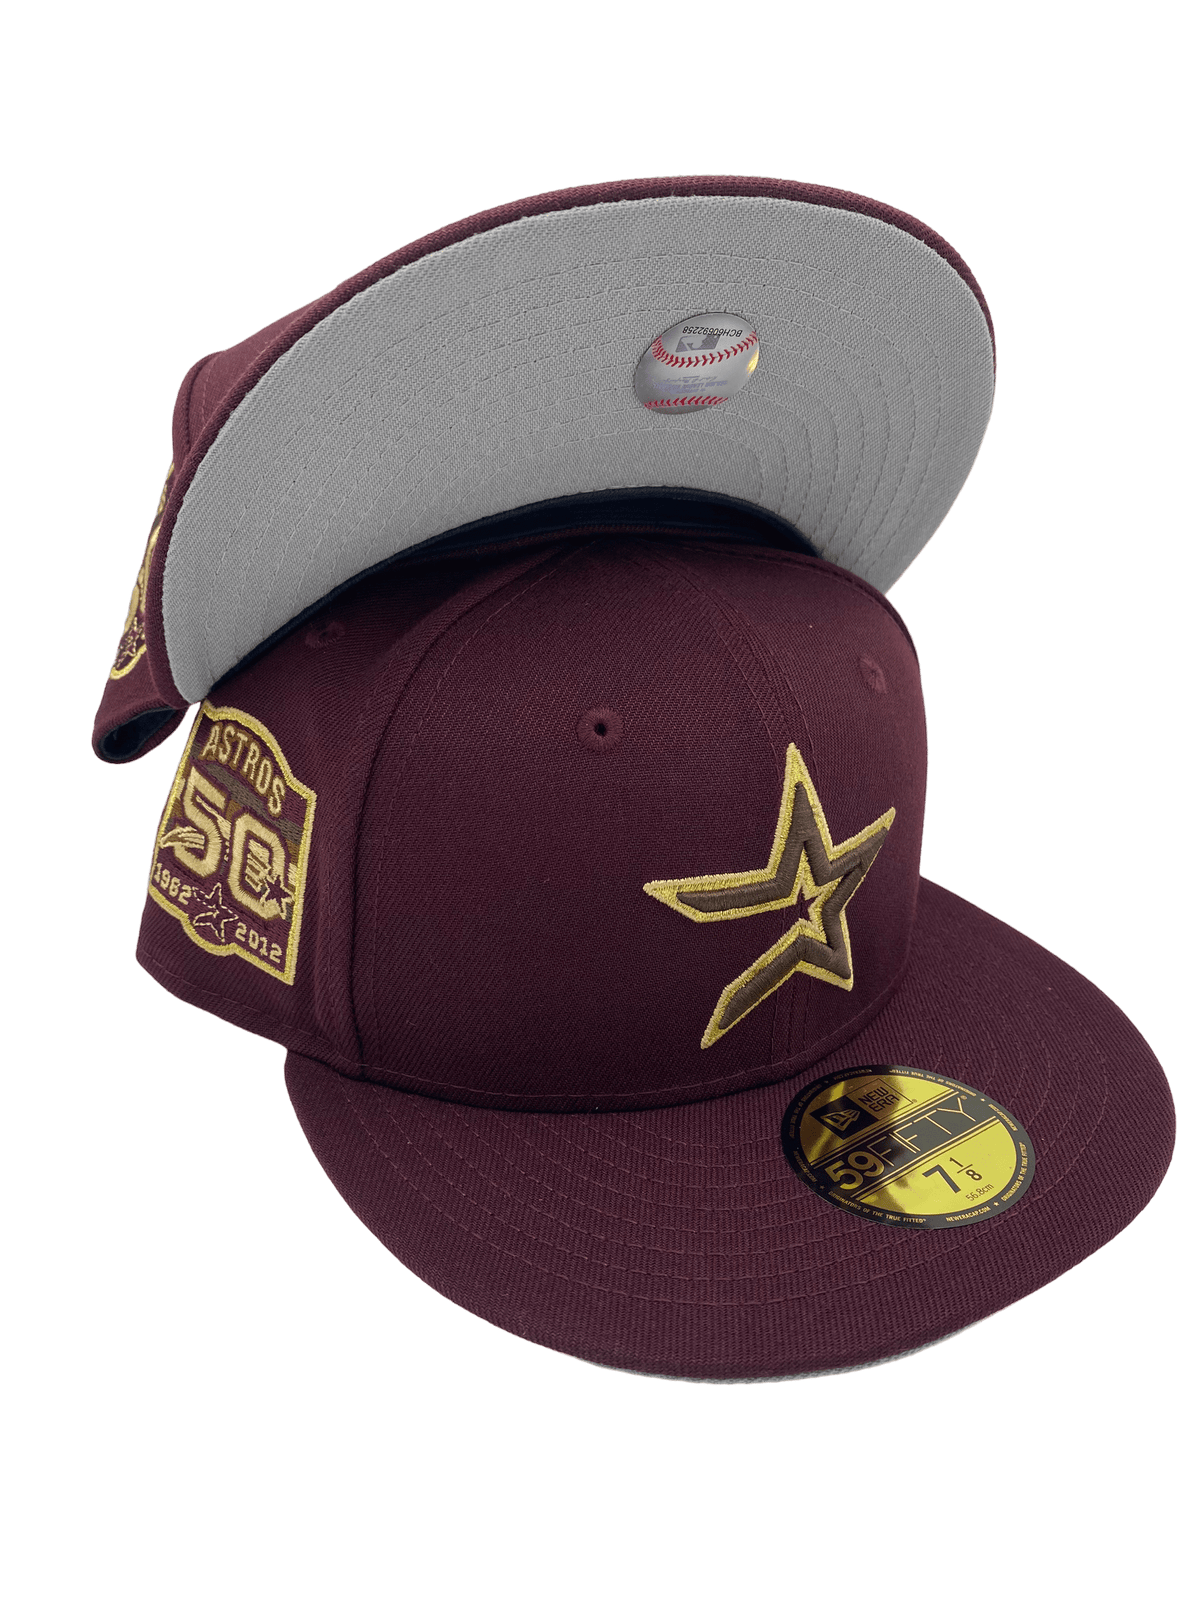 world series houston astros hat